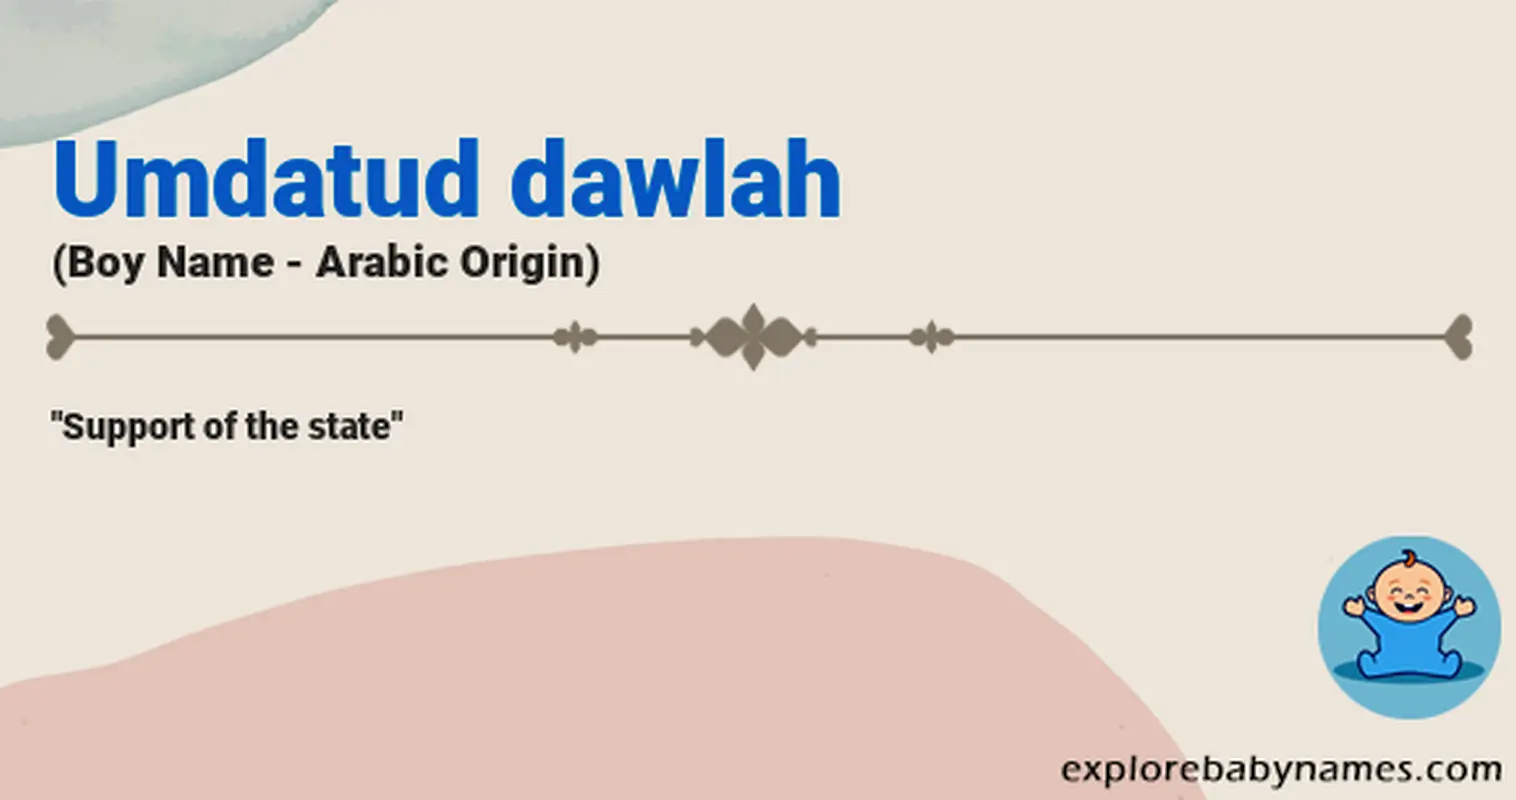 Meaning of Umdatud dawlah